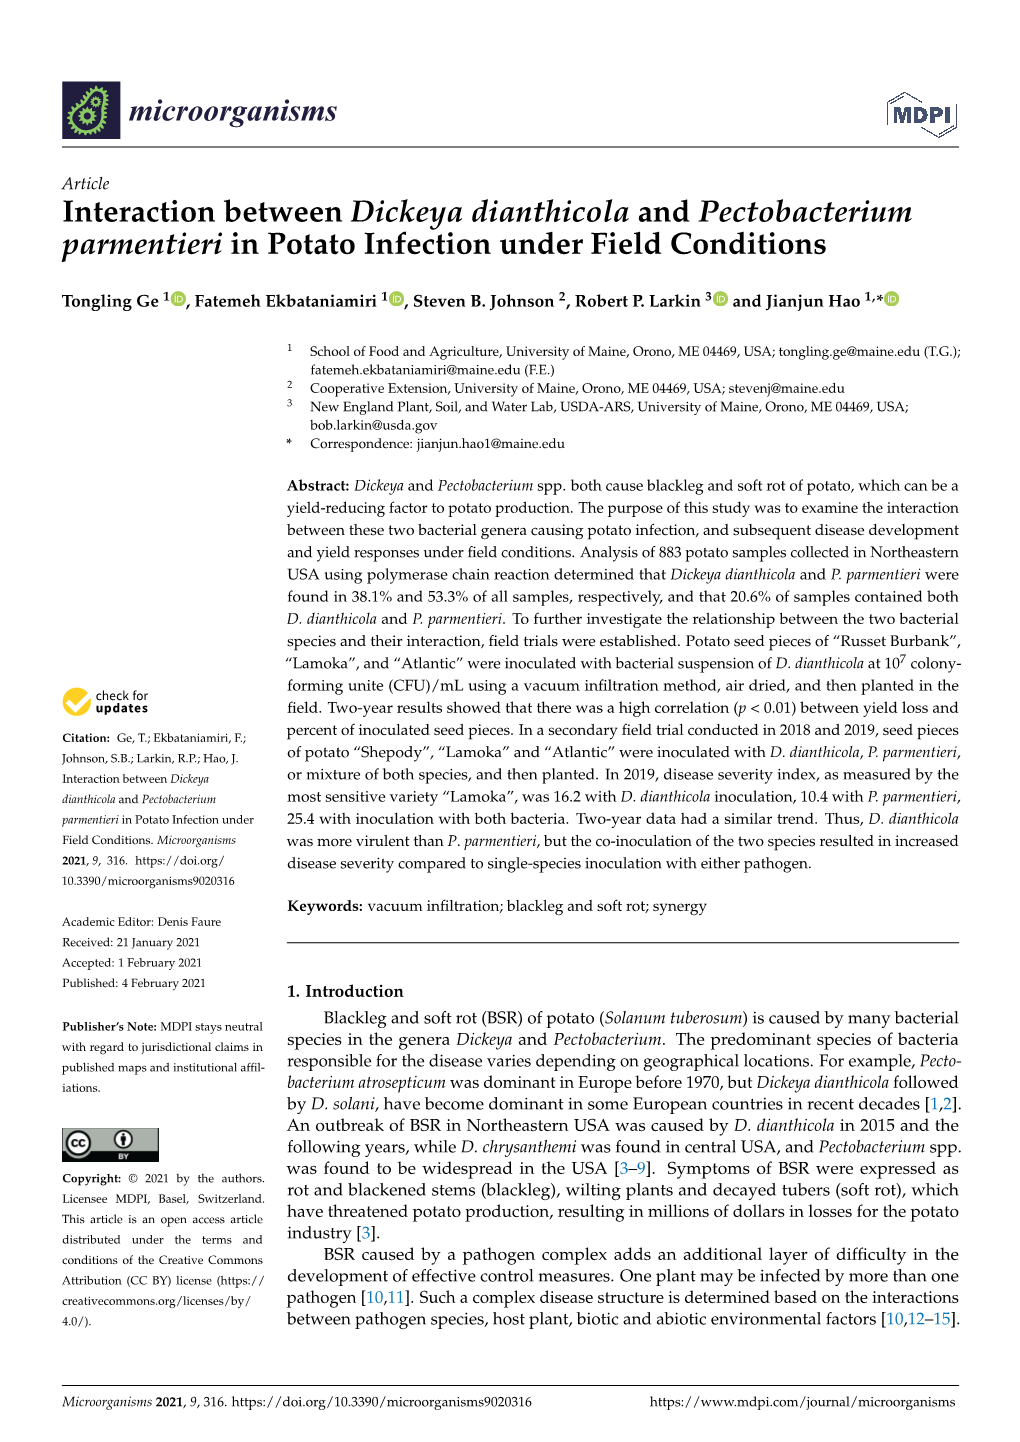 Interaction Between Dickeya Dianthicola and Pectobacterium Parmentieri in Potato Infection Under Field Conditions